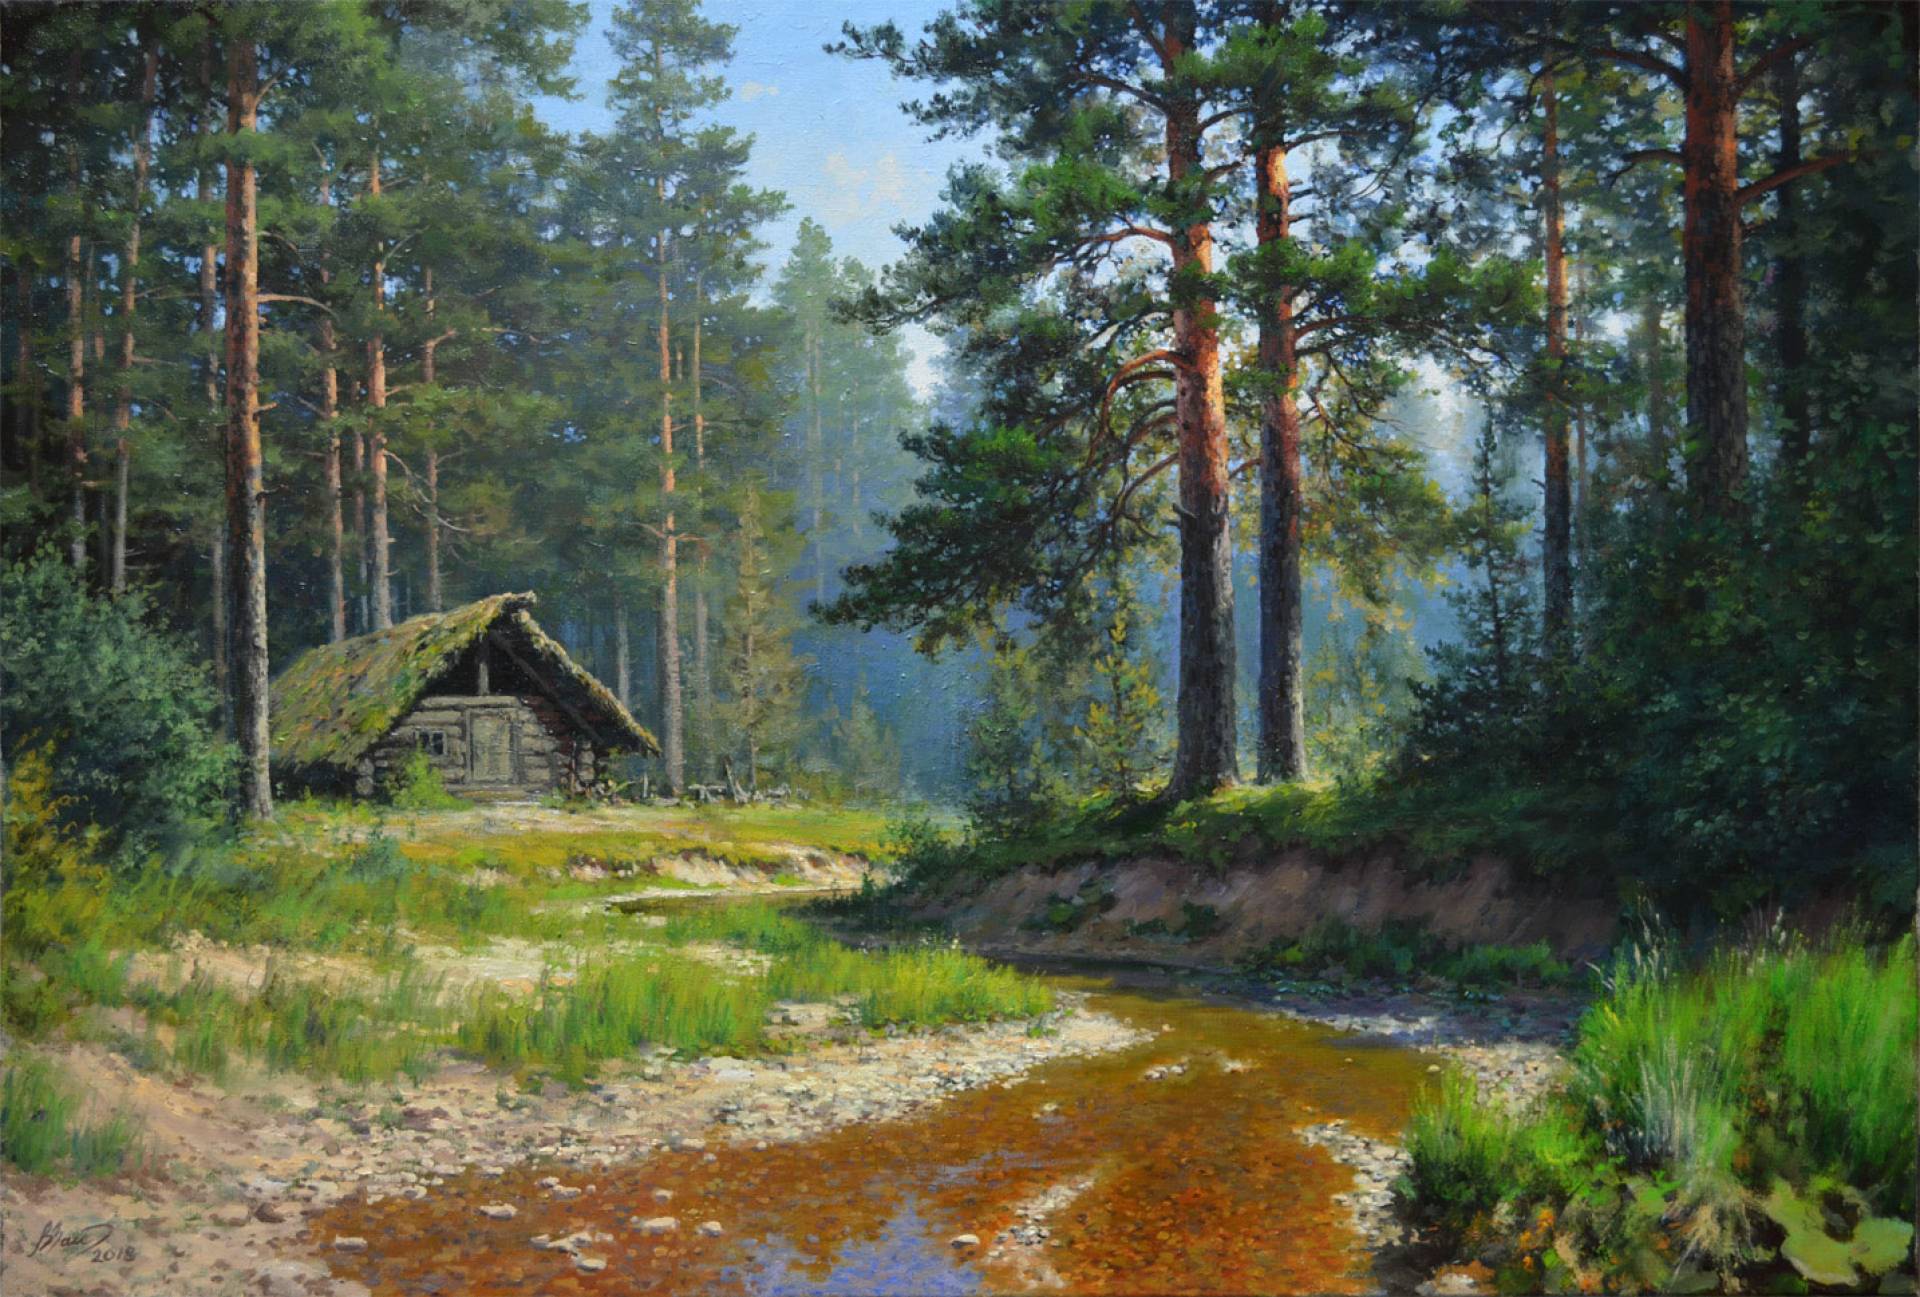 House in the Pine Forest - 1, Vadim Zainullin, 买画 油